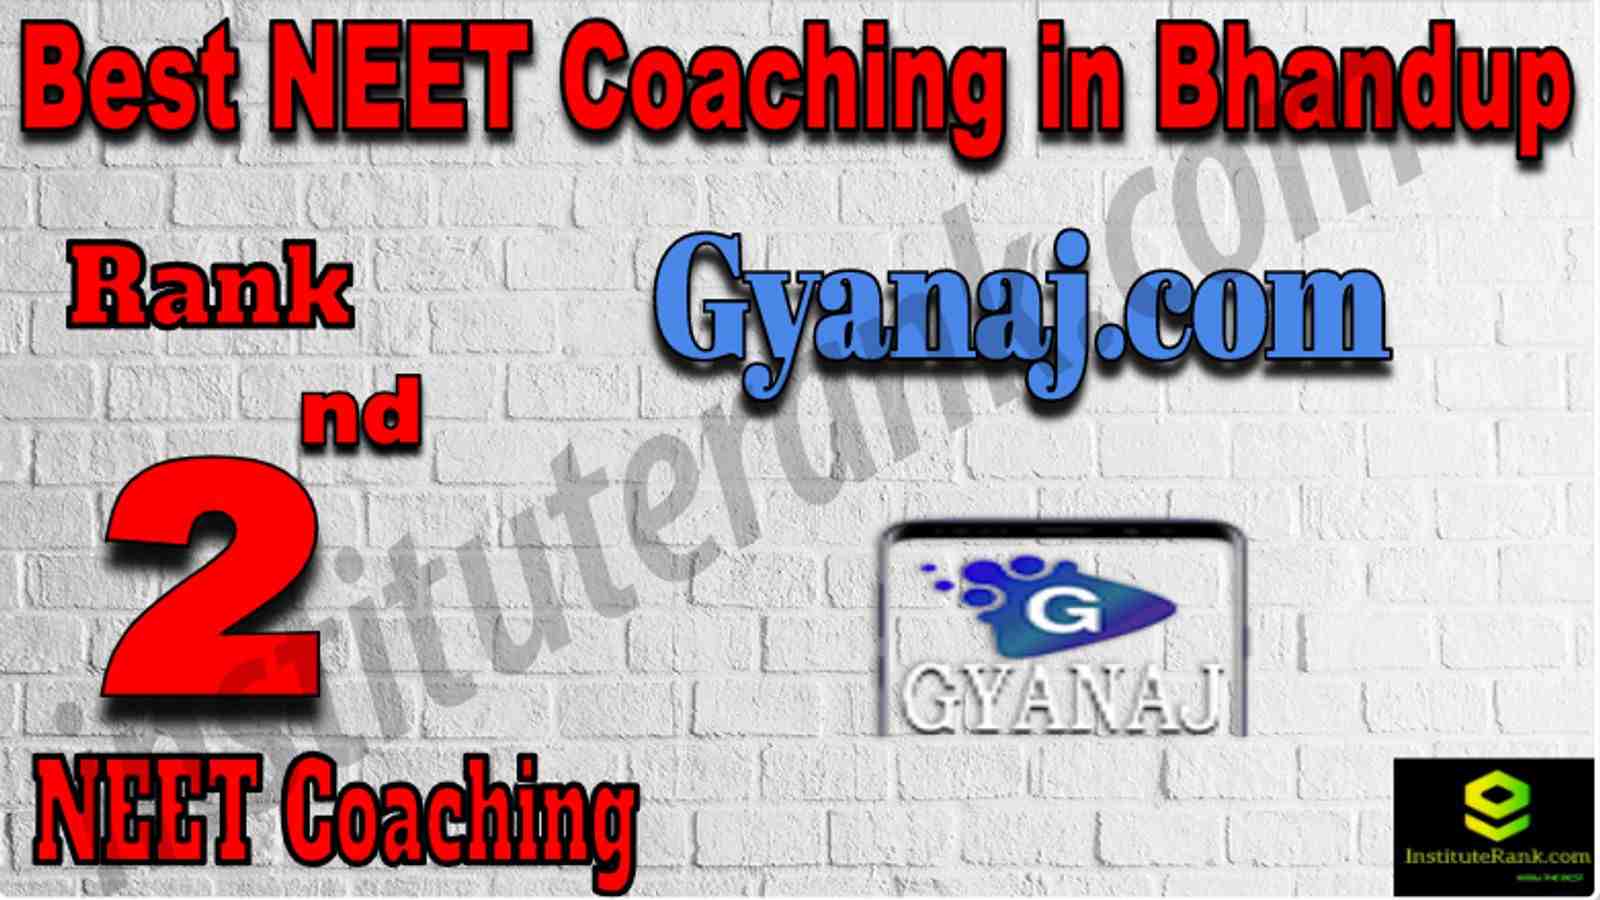 Rank 2 Best NEET Coaching in Bhandup